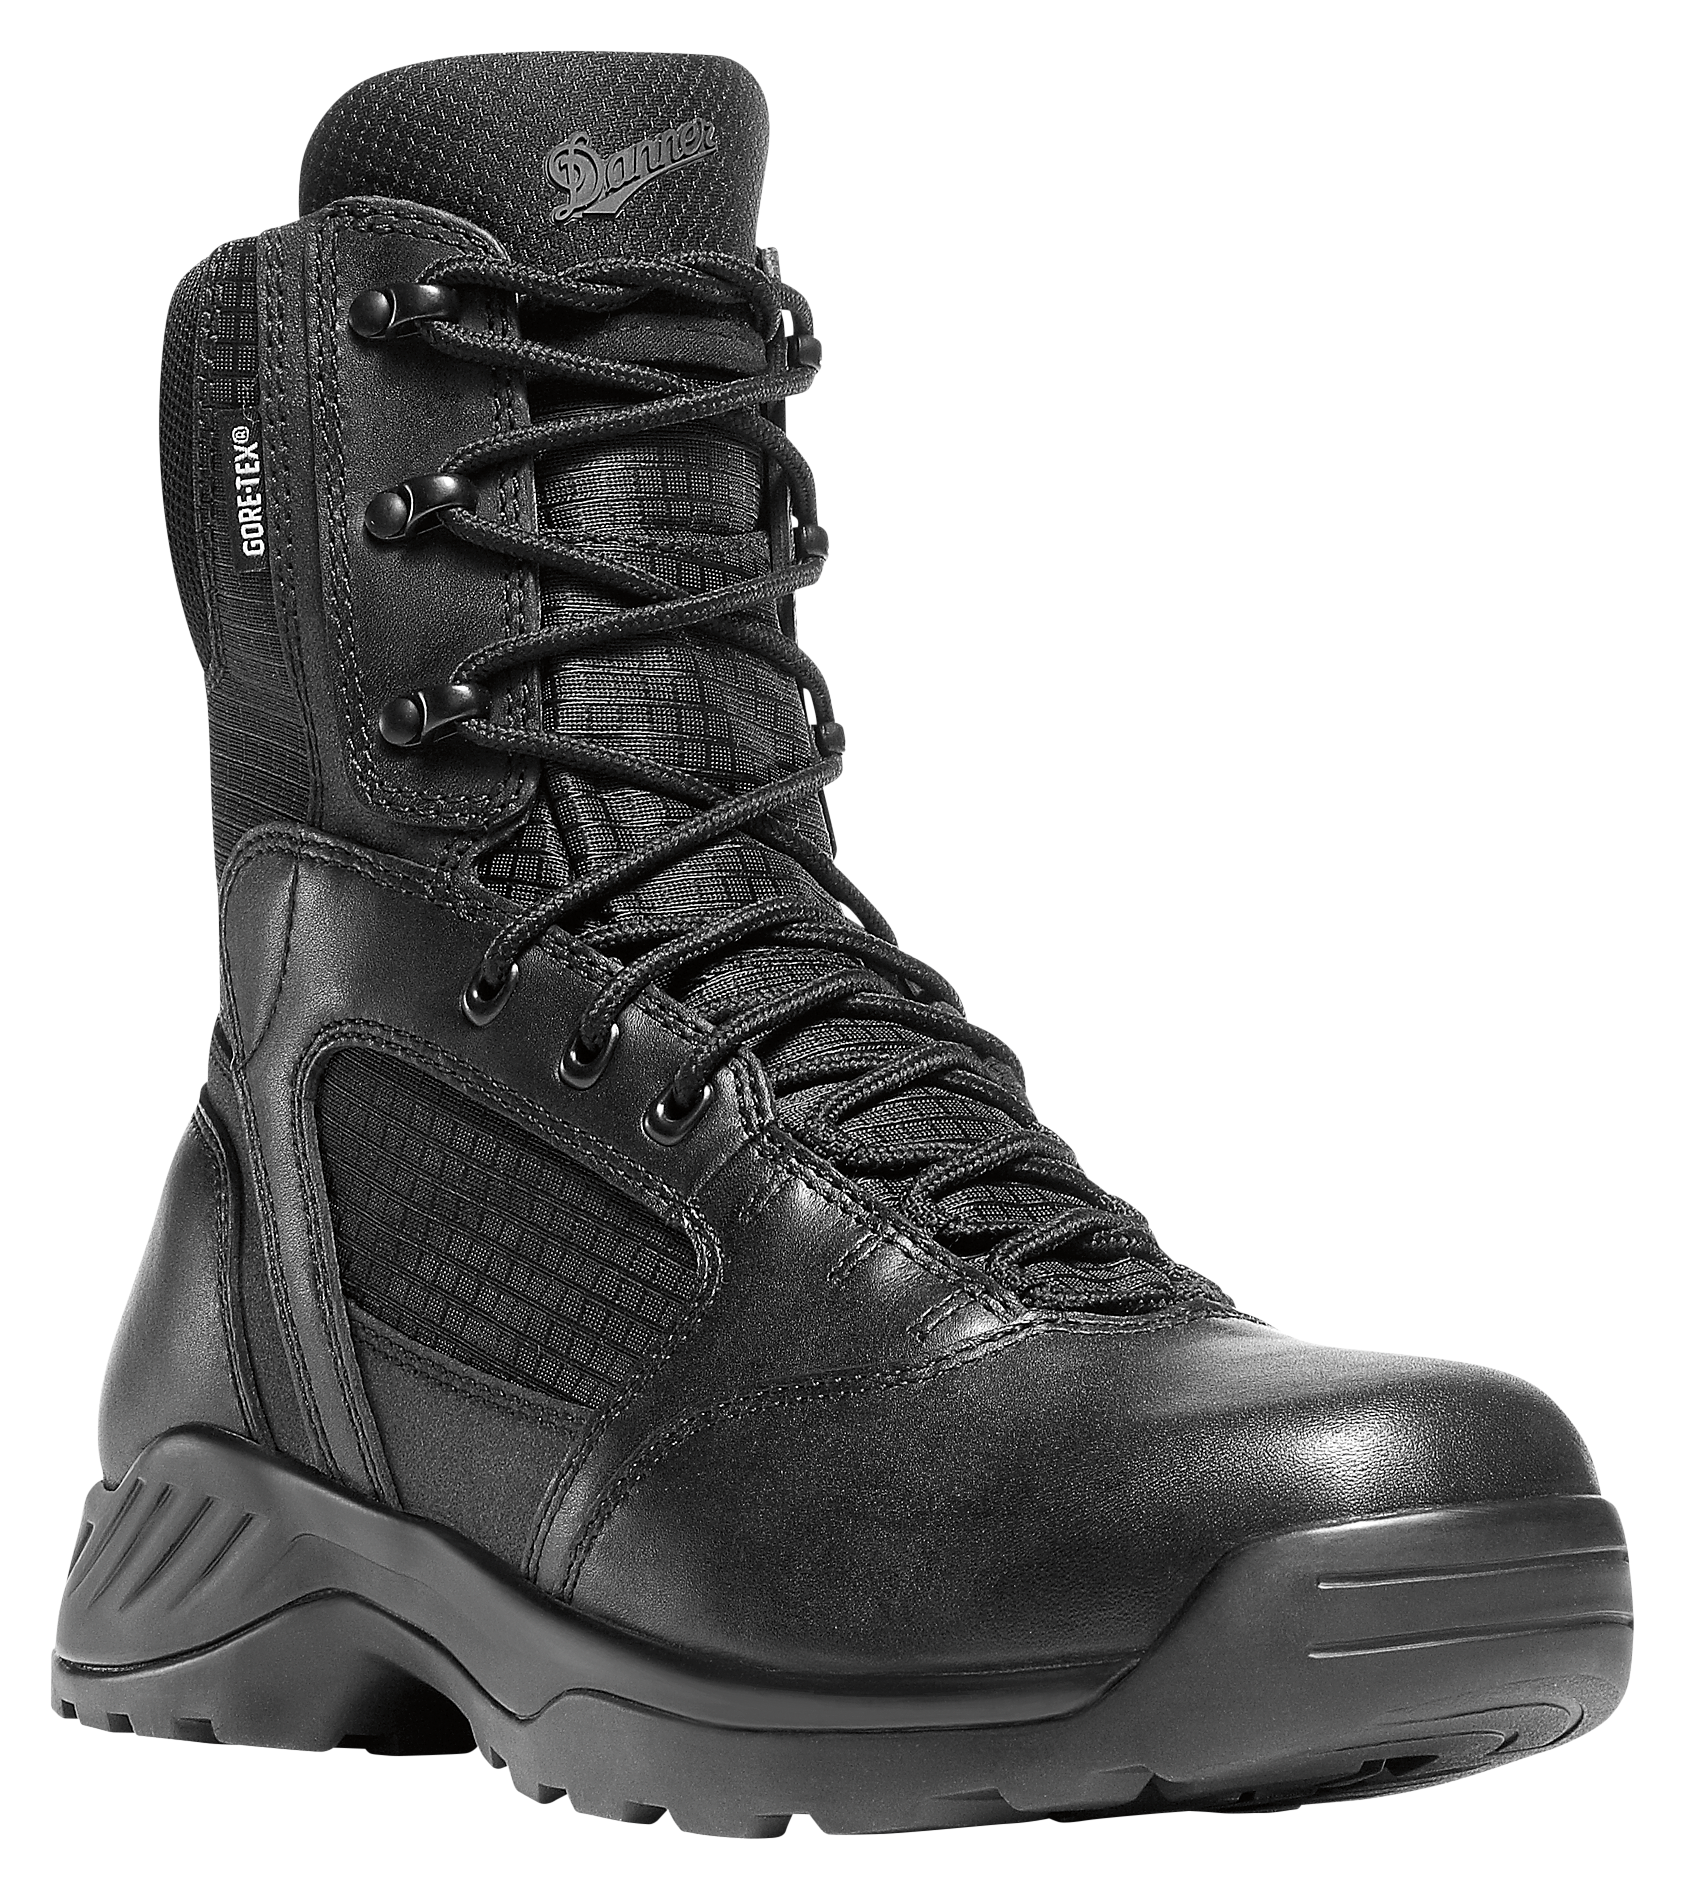 Danner Kinetic GTX Side-Zip Waterproof Tactical Duty Boots for Men - Black - 10.5M